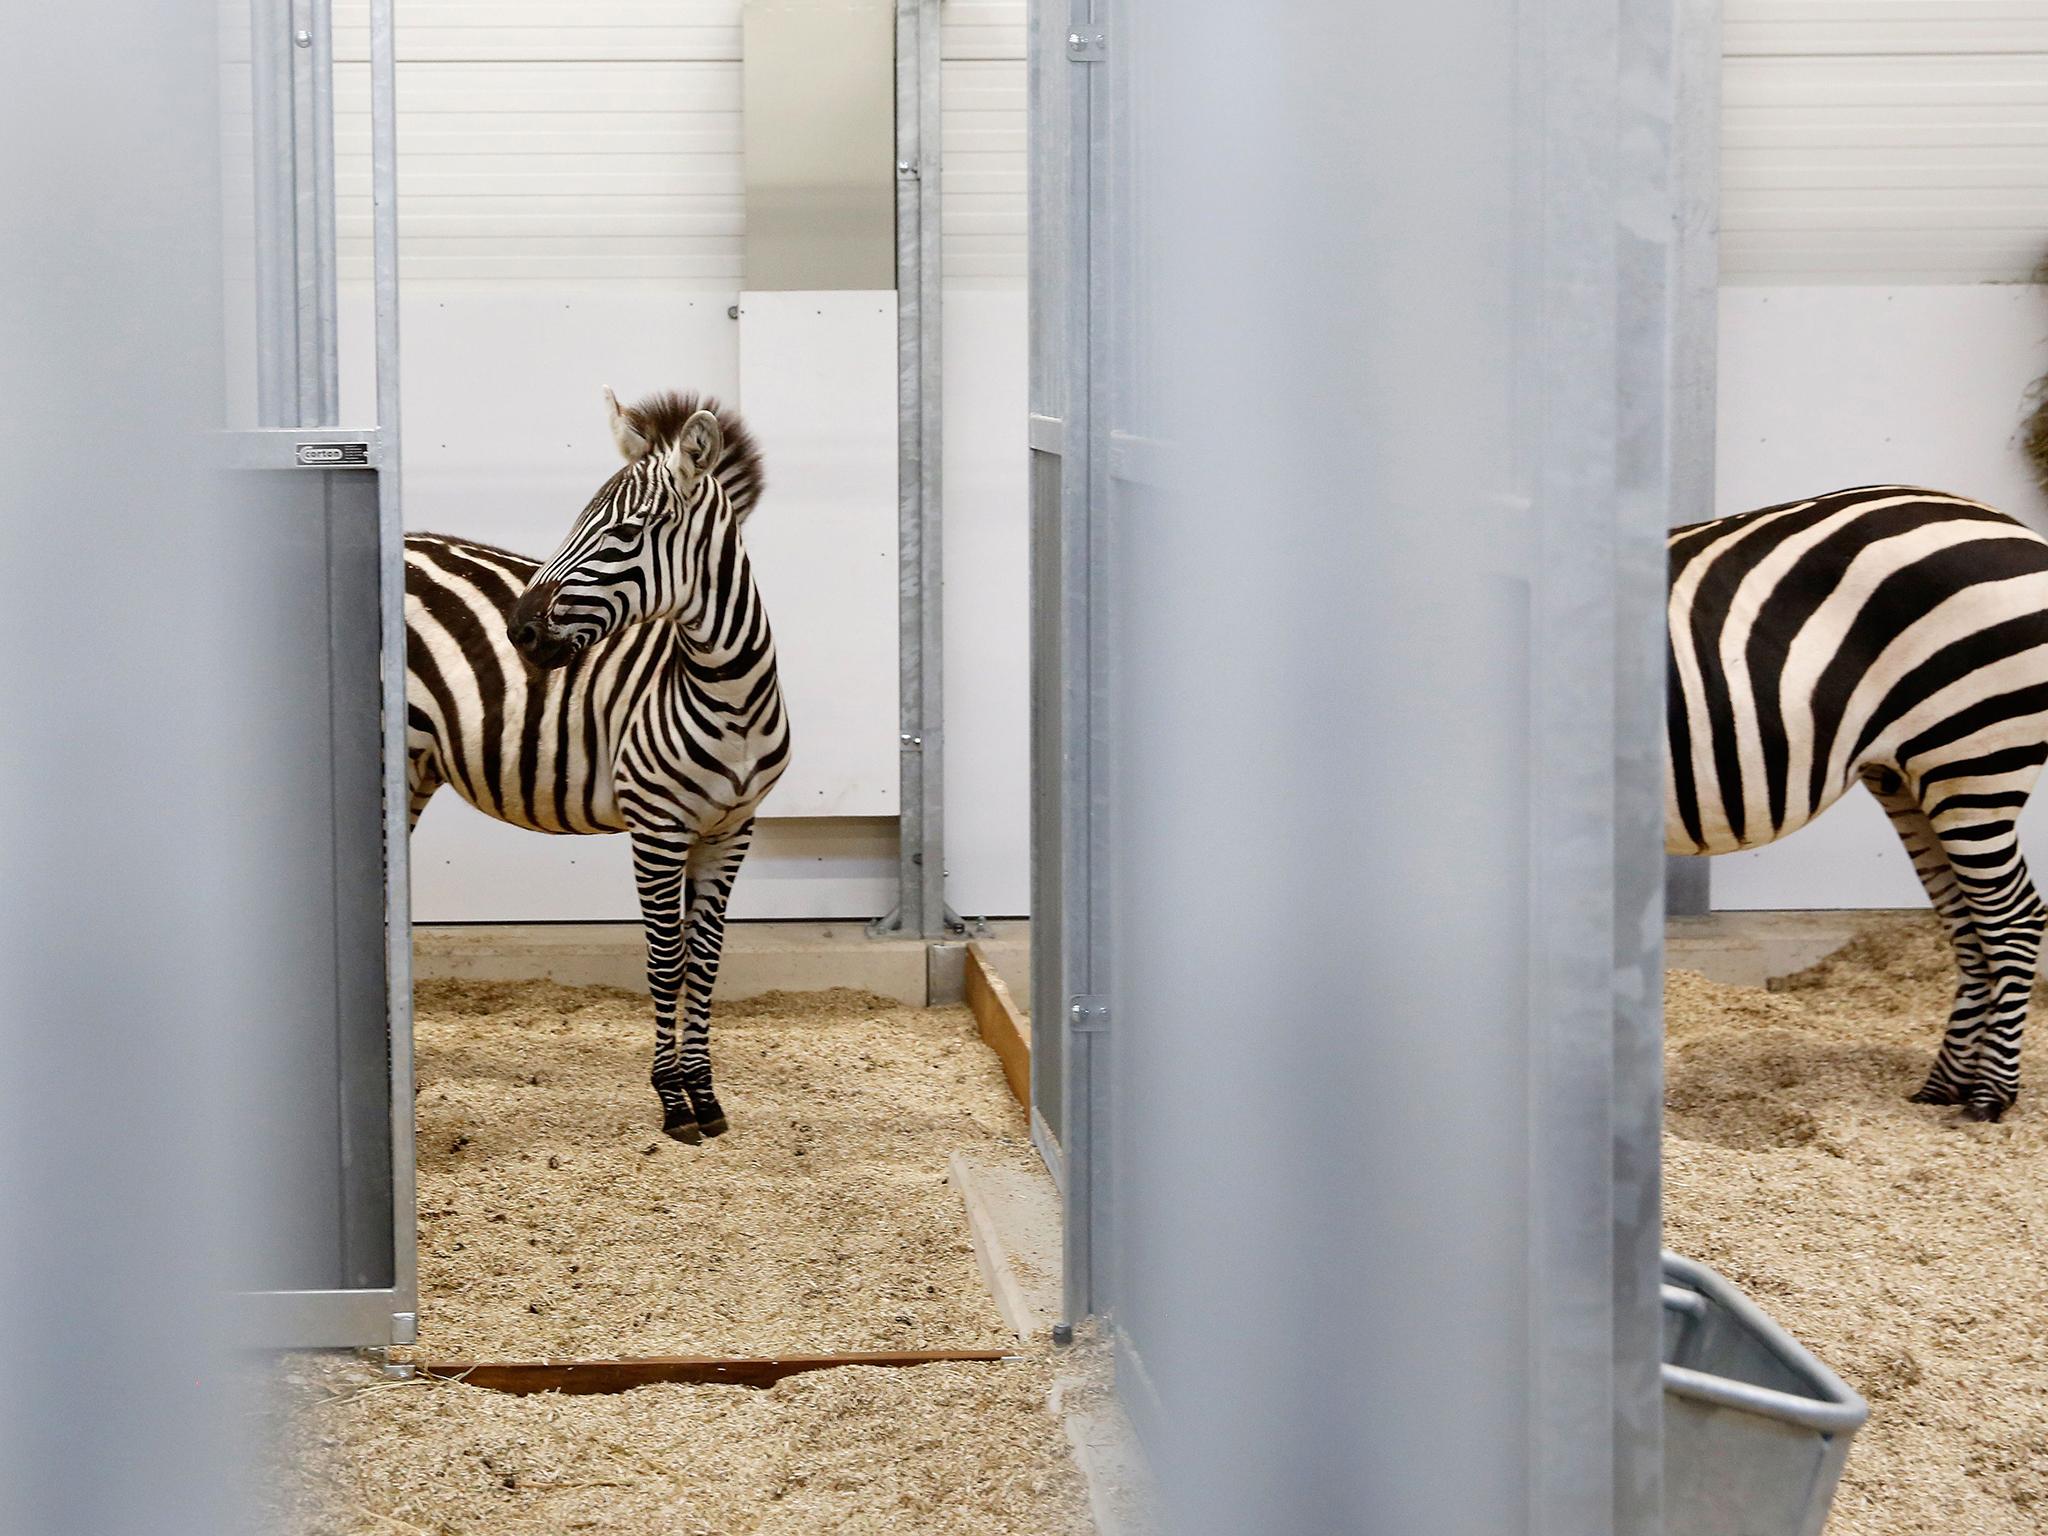 Zebras at their new location in the Wildlands Adventure Zoo in Emmen, the Netherlands. Breeding programmes don’t always aid species conservation (AFP/Getty)